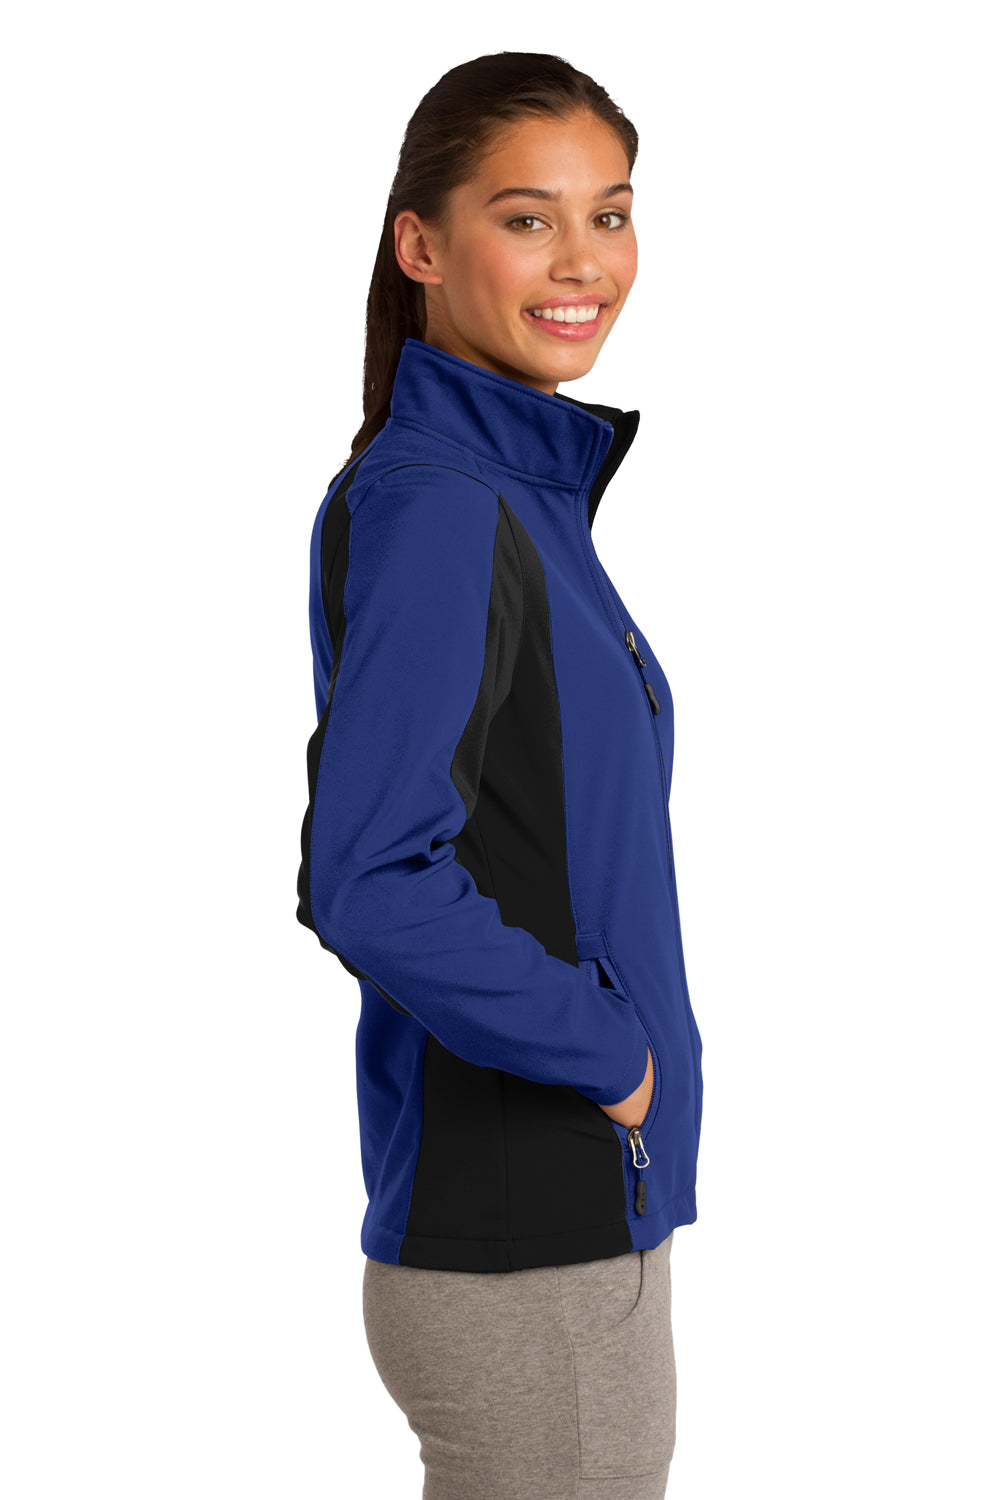 Sport-Tek LST970 Womens Water Resistant Full Zip Jacket Royal Blue/Black Side